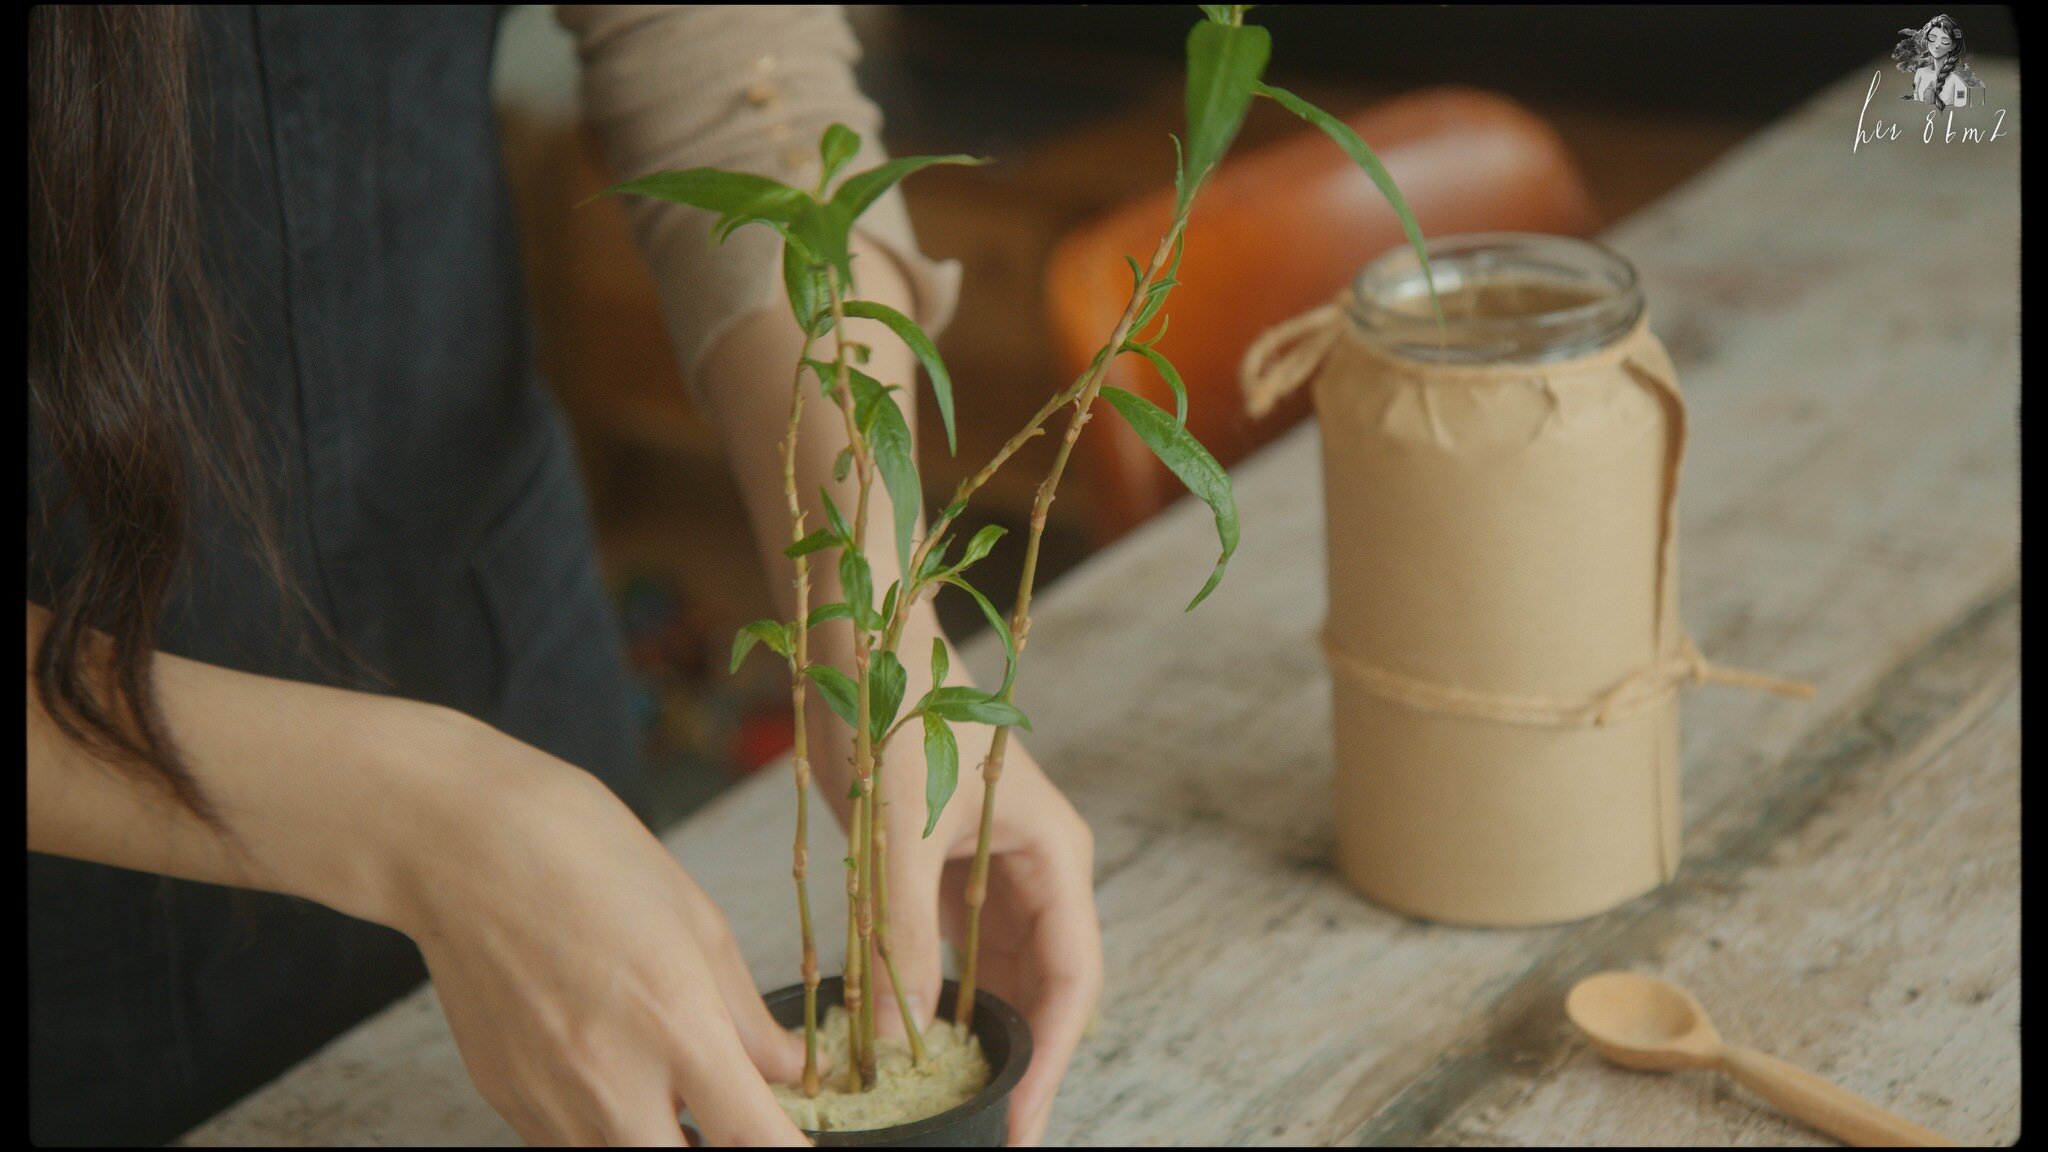 Indoors Gardening - Grow Vegetables in Glass Jars - Her 86m2 20a.jpg